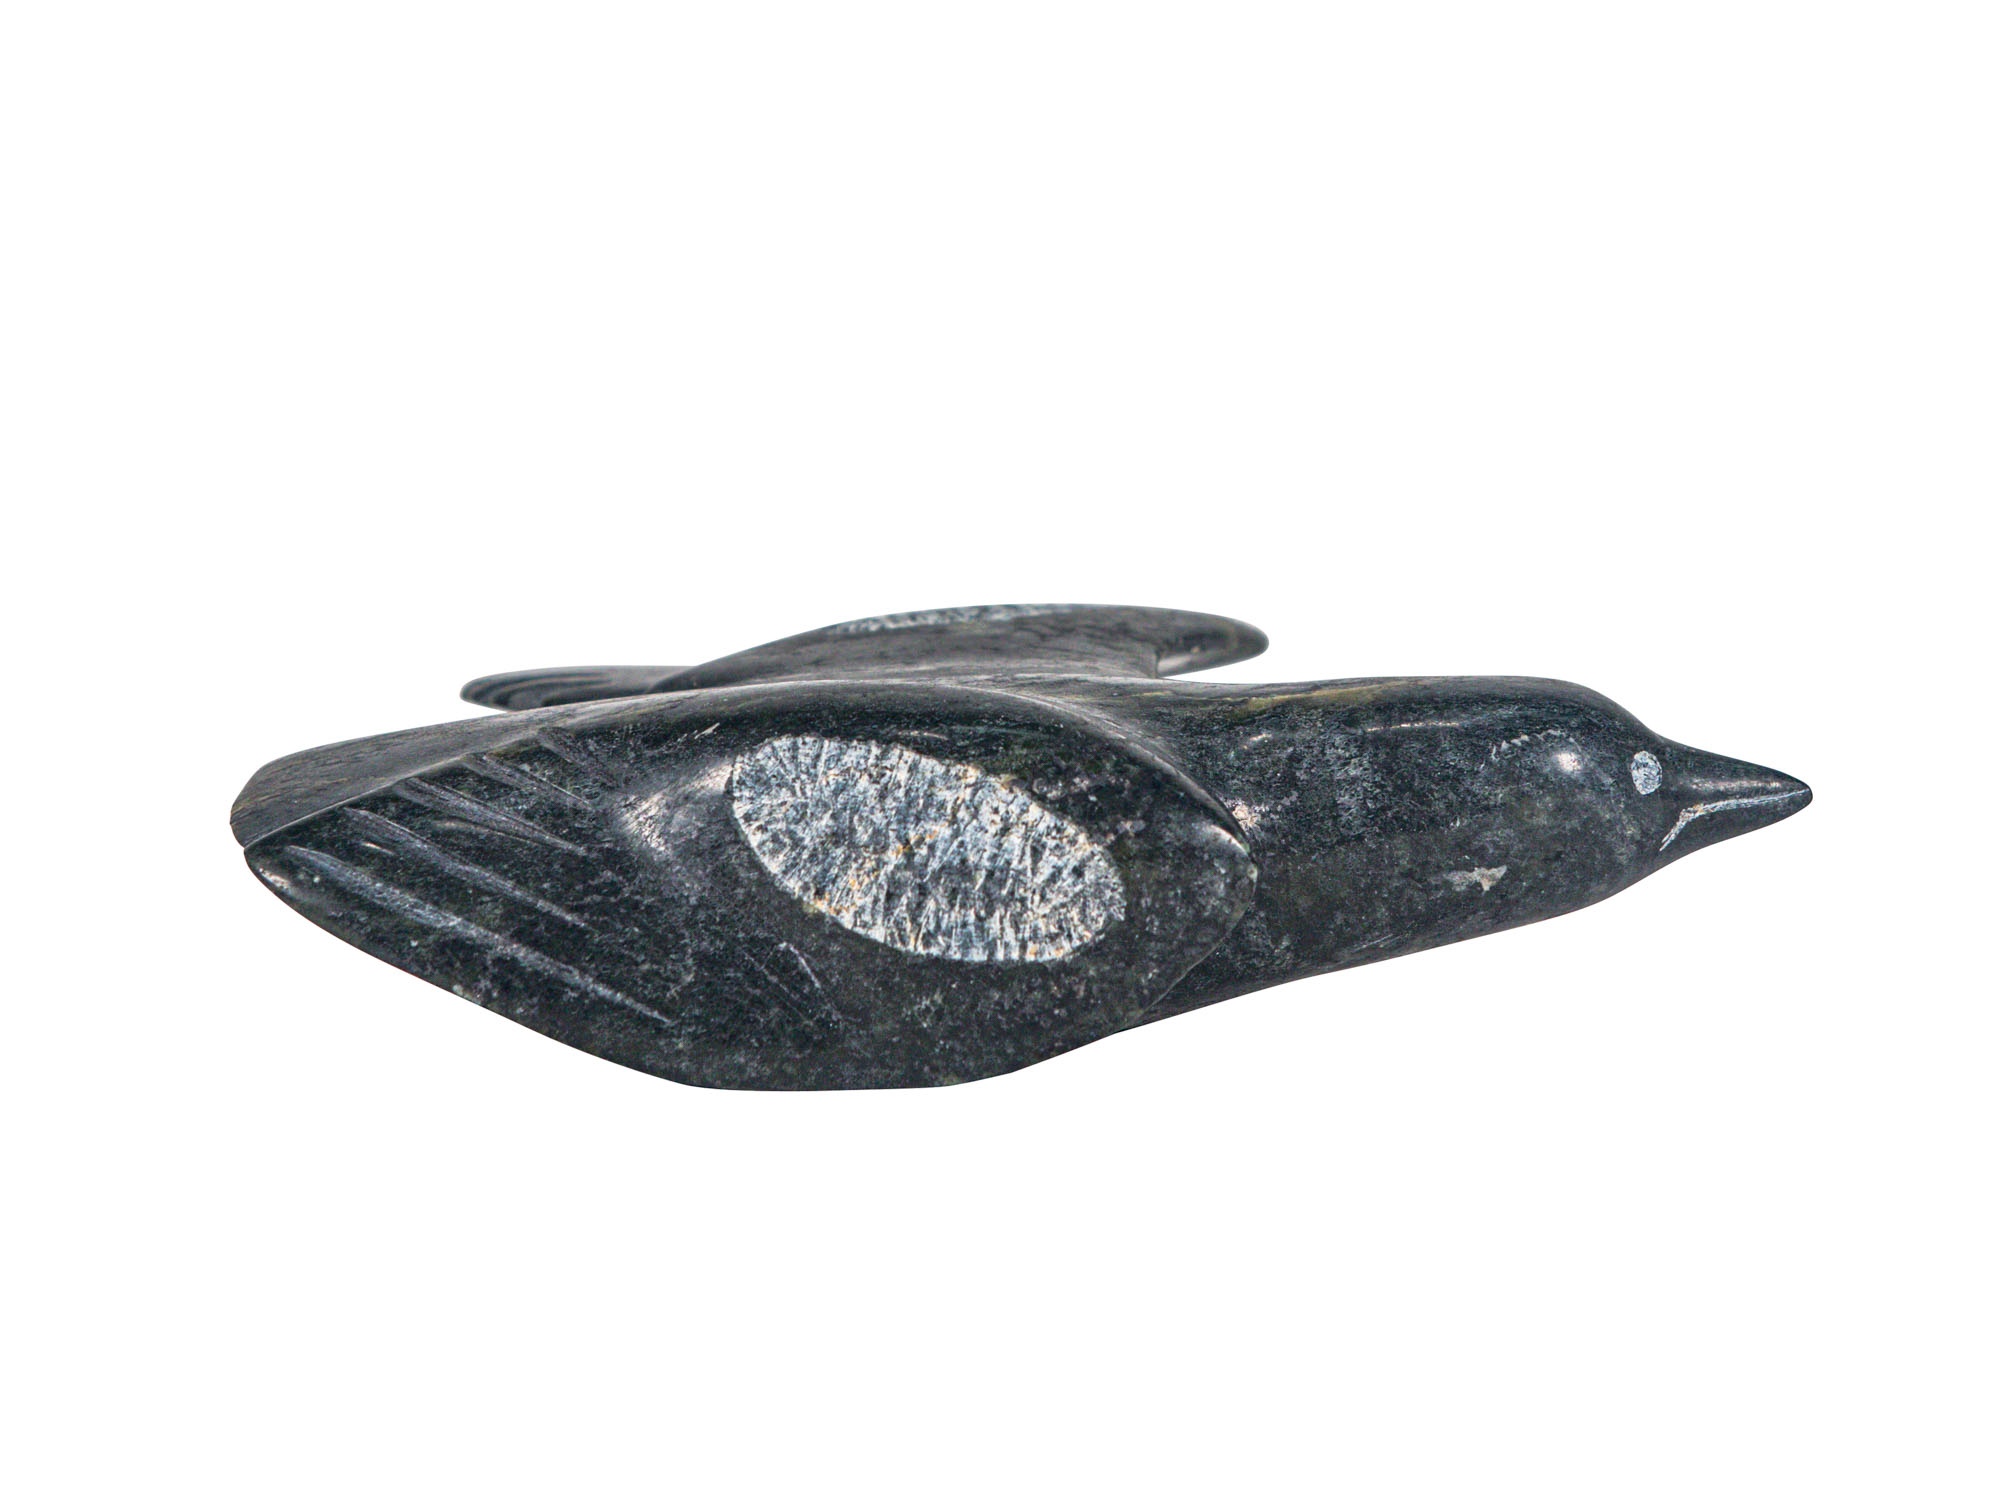 Inuit Soapstone Carving: Bird: Gallery Item - 44-G37 (10URM1)